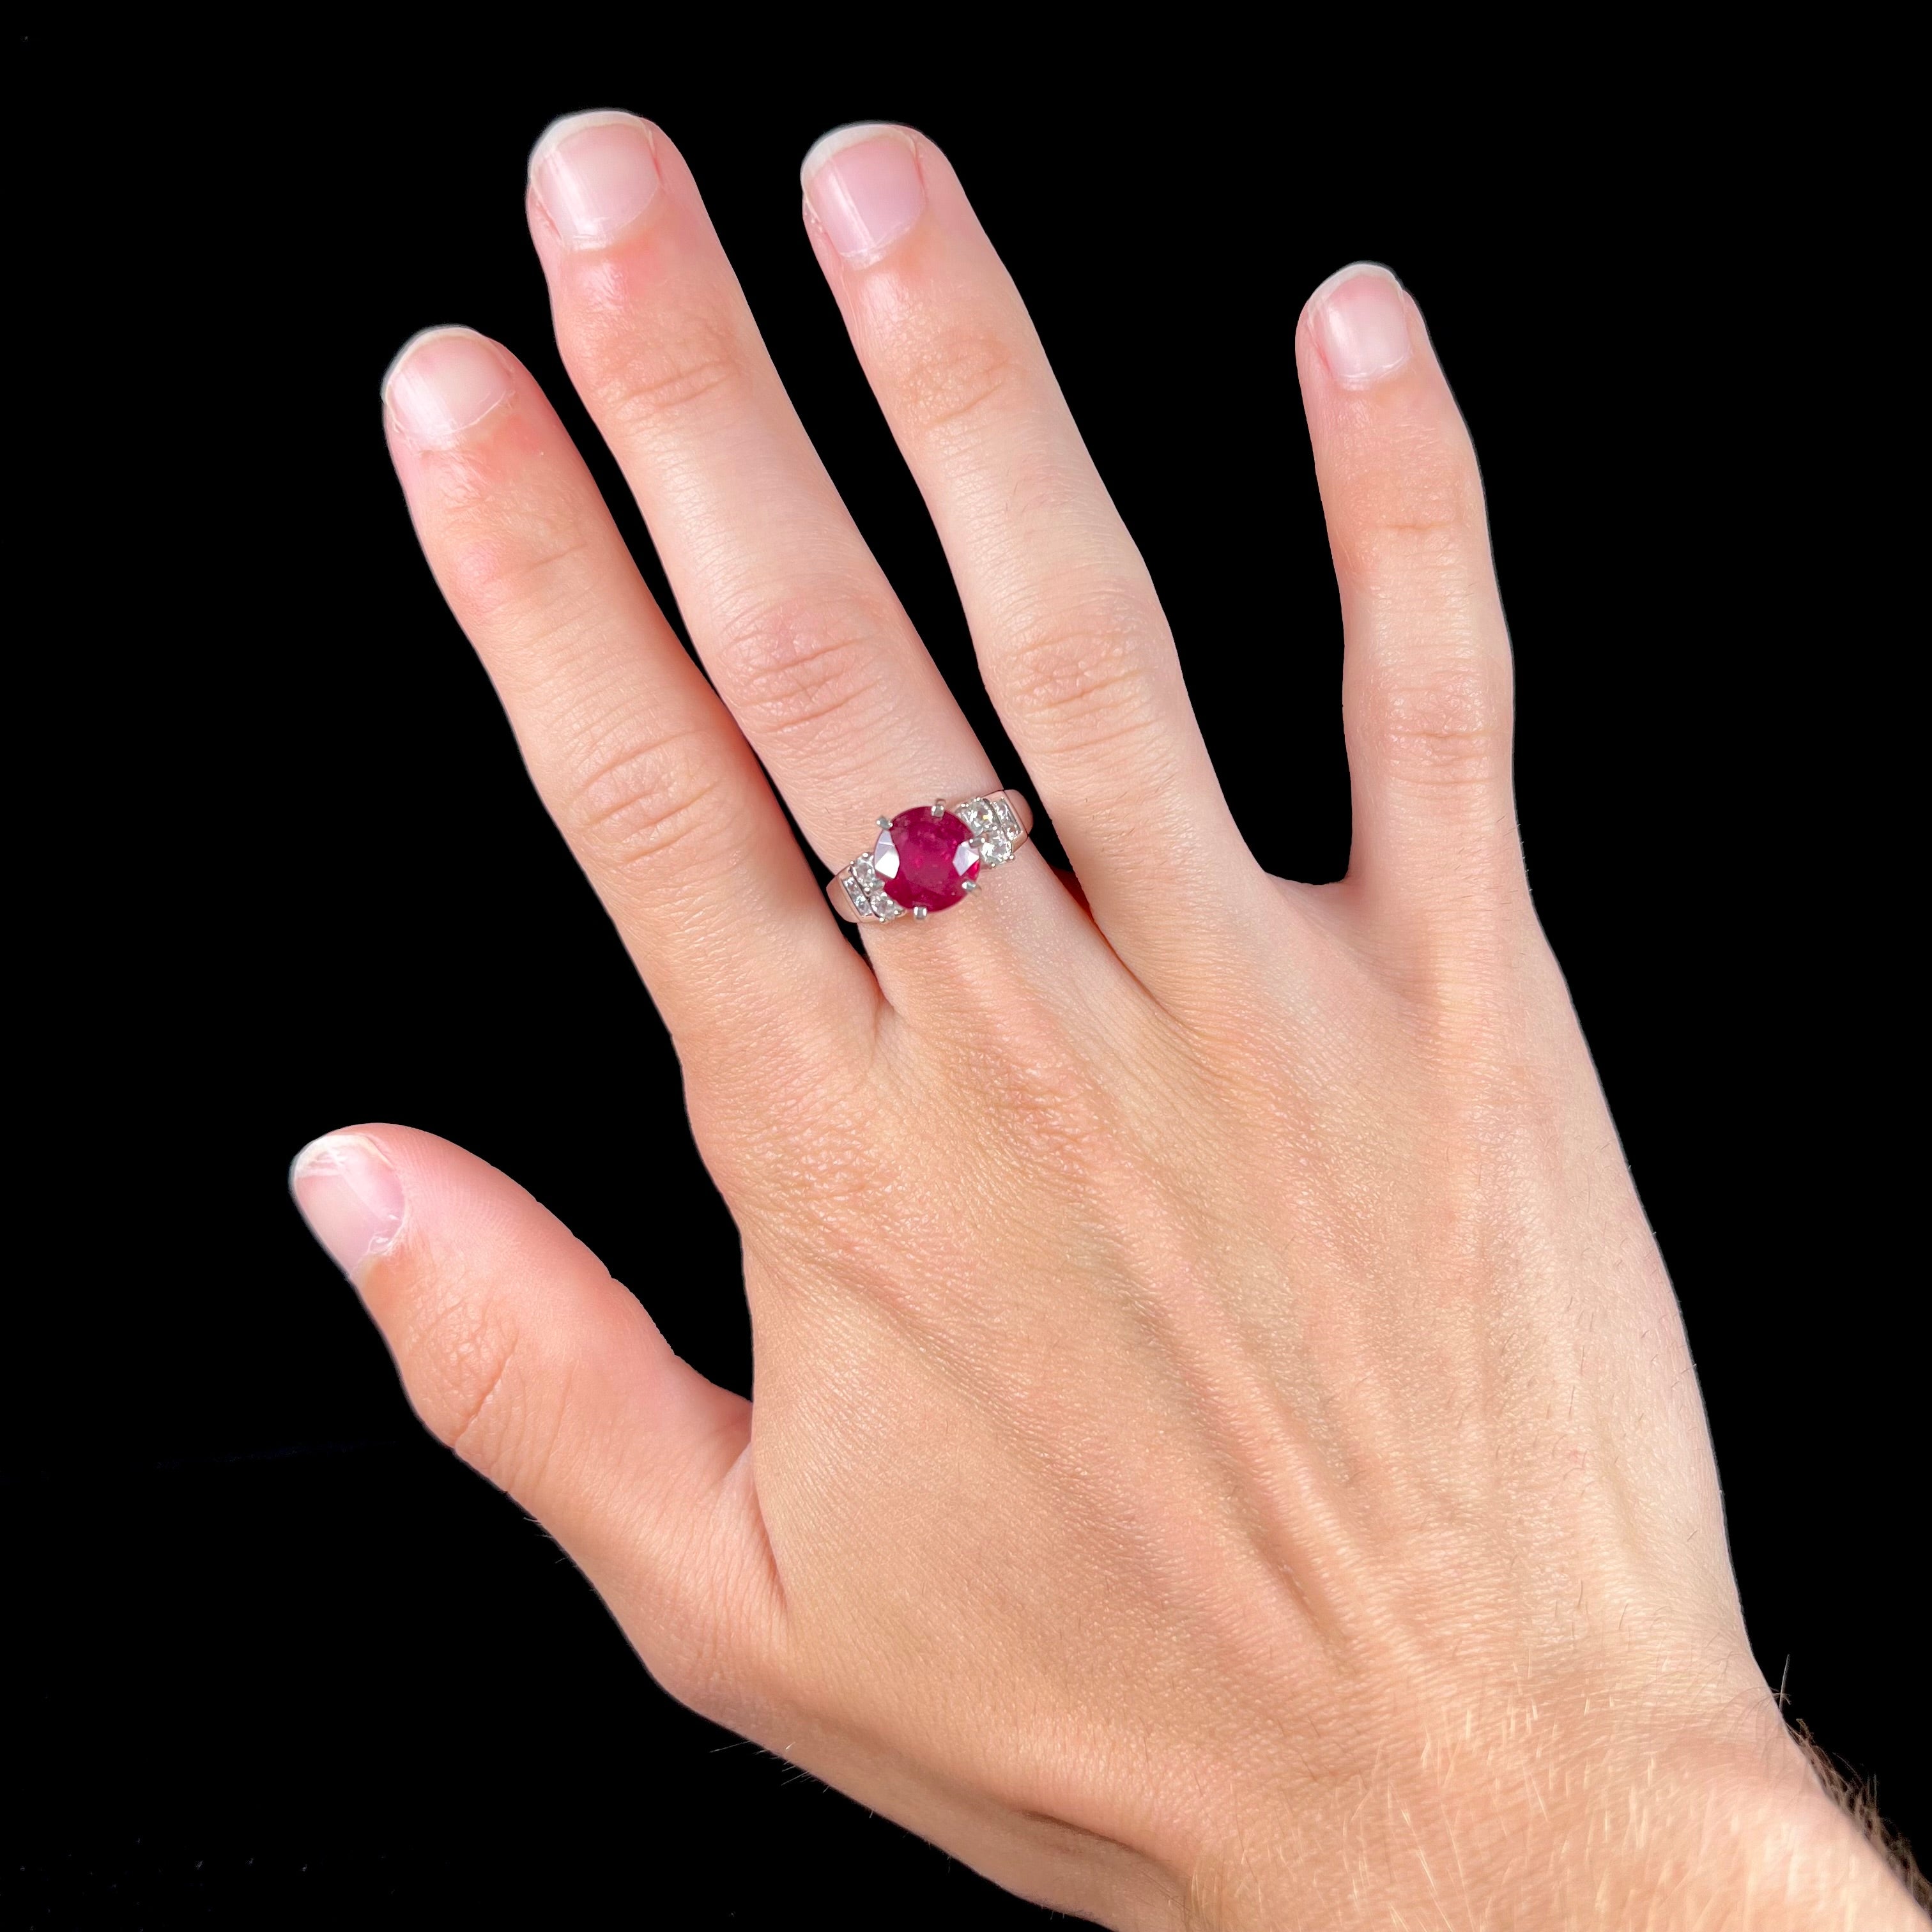 Handmade Natural Ruby Ring | Genuine Ruby Jewelry